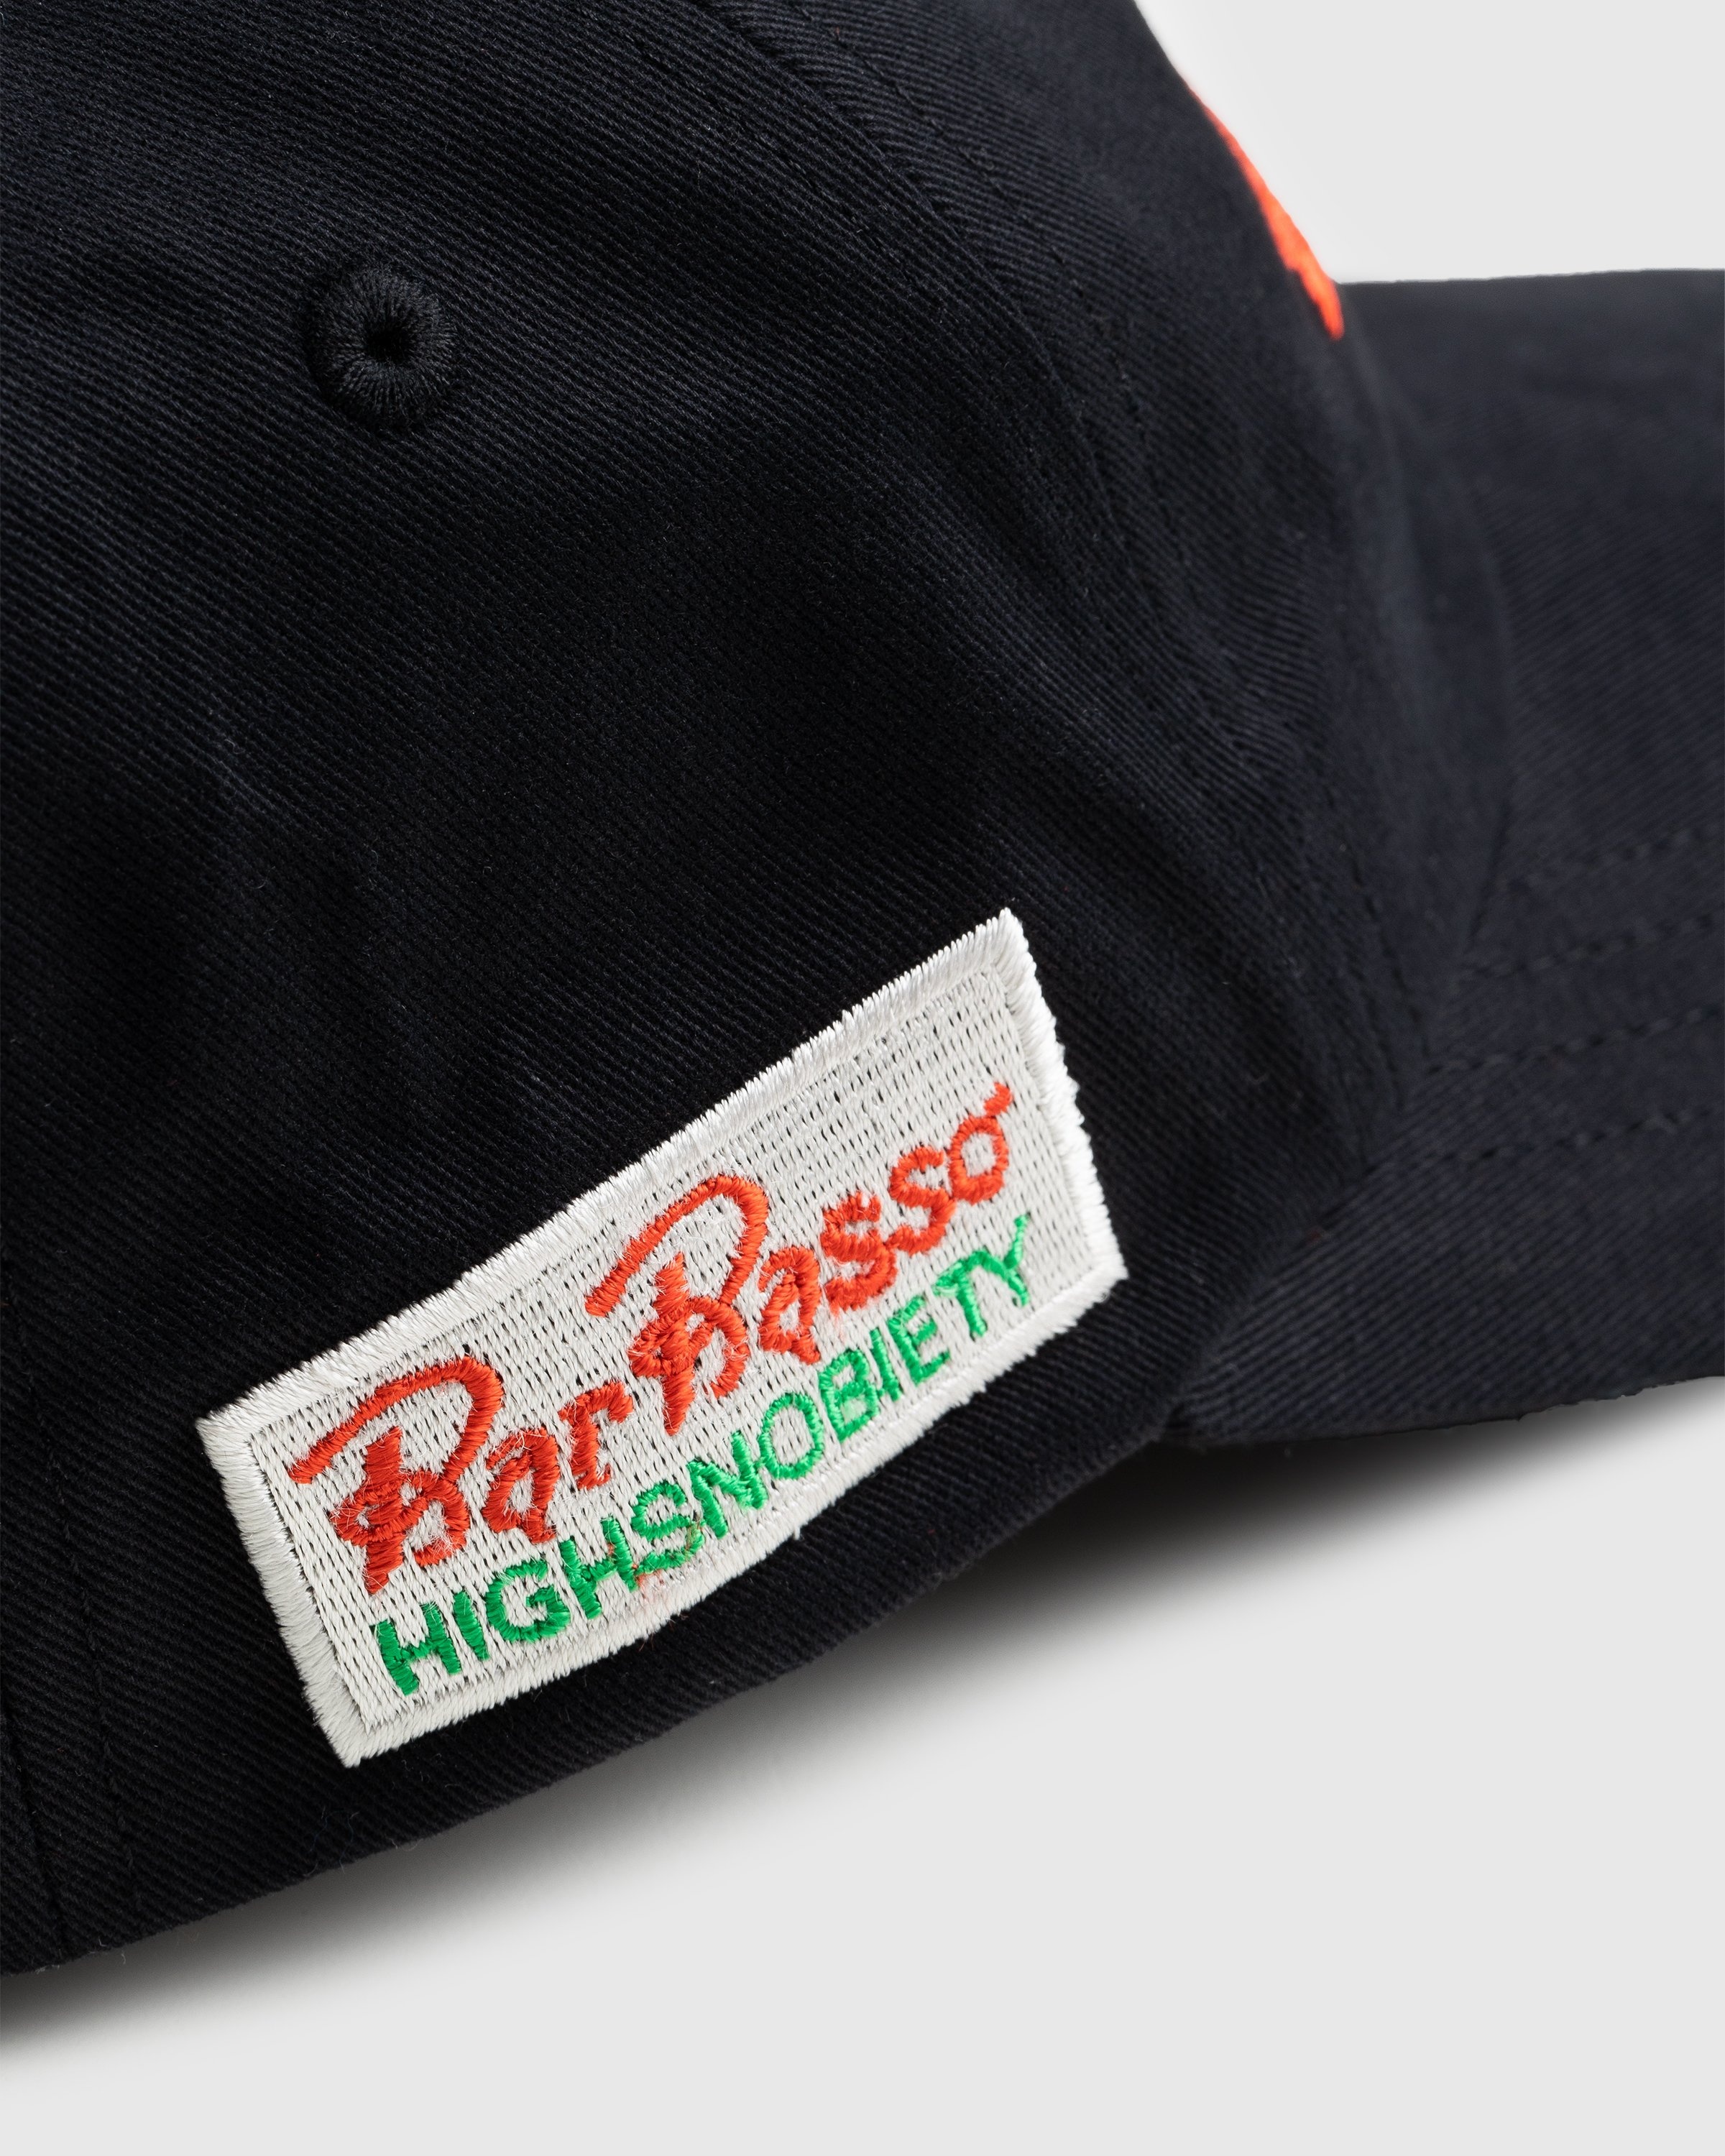 Bar Basso x Highsnobiety – Sbagliato Cap Black - Hats - Black - Image 4